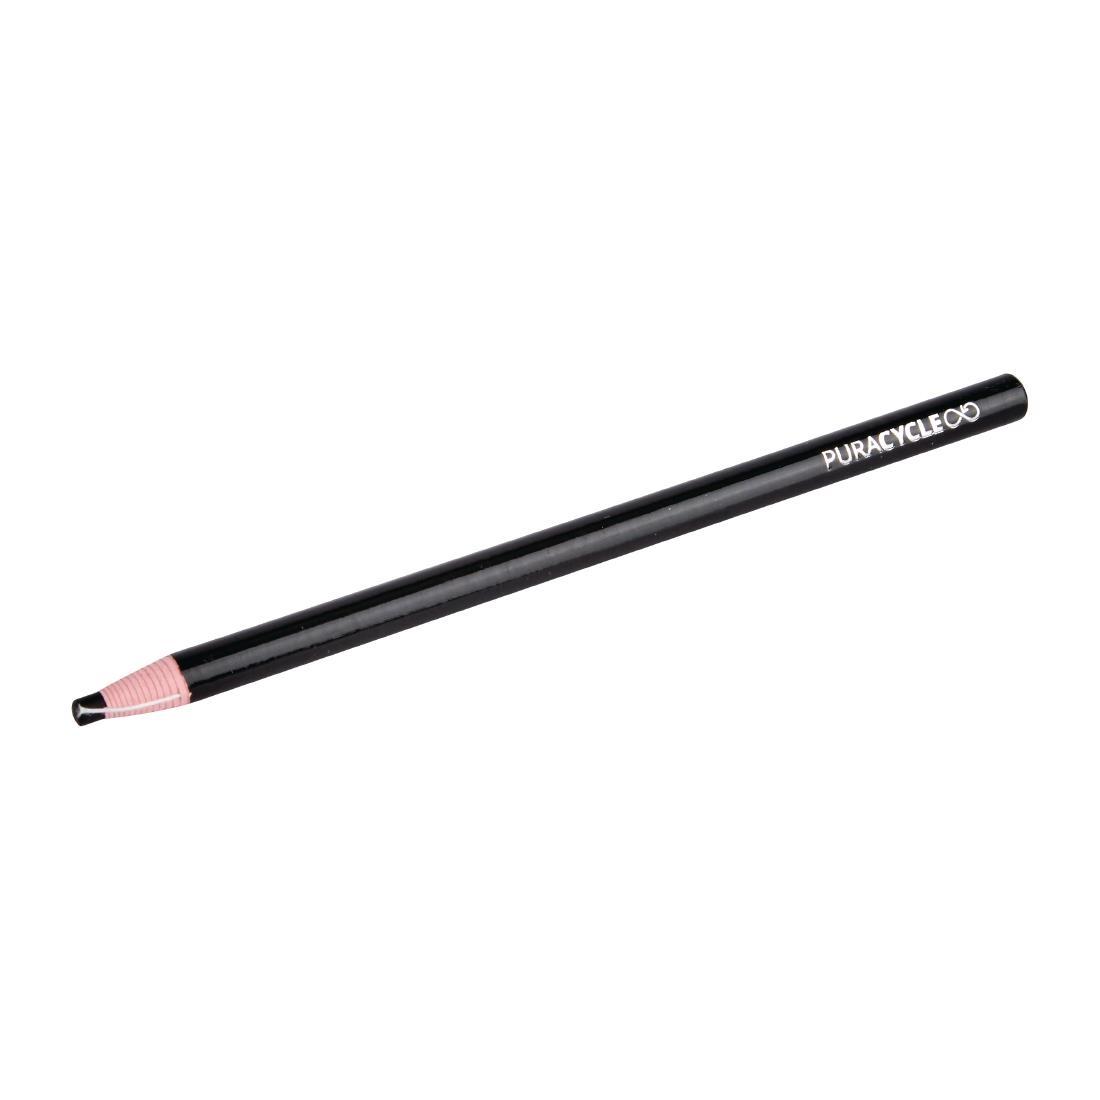 PuraCycle Wax Pencils (Pack of 12) - FE282  - 2